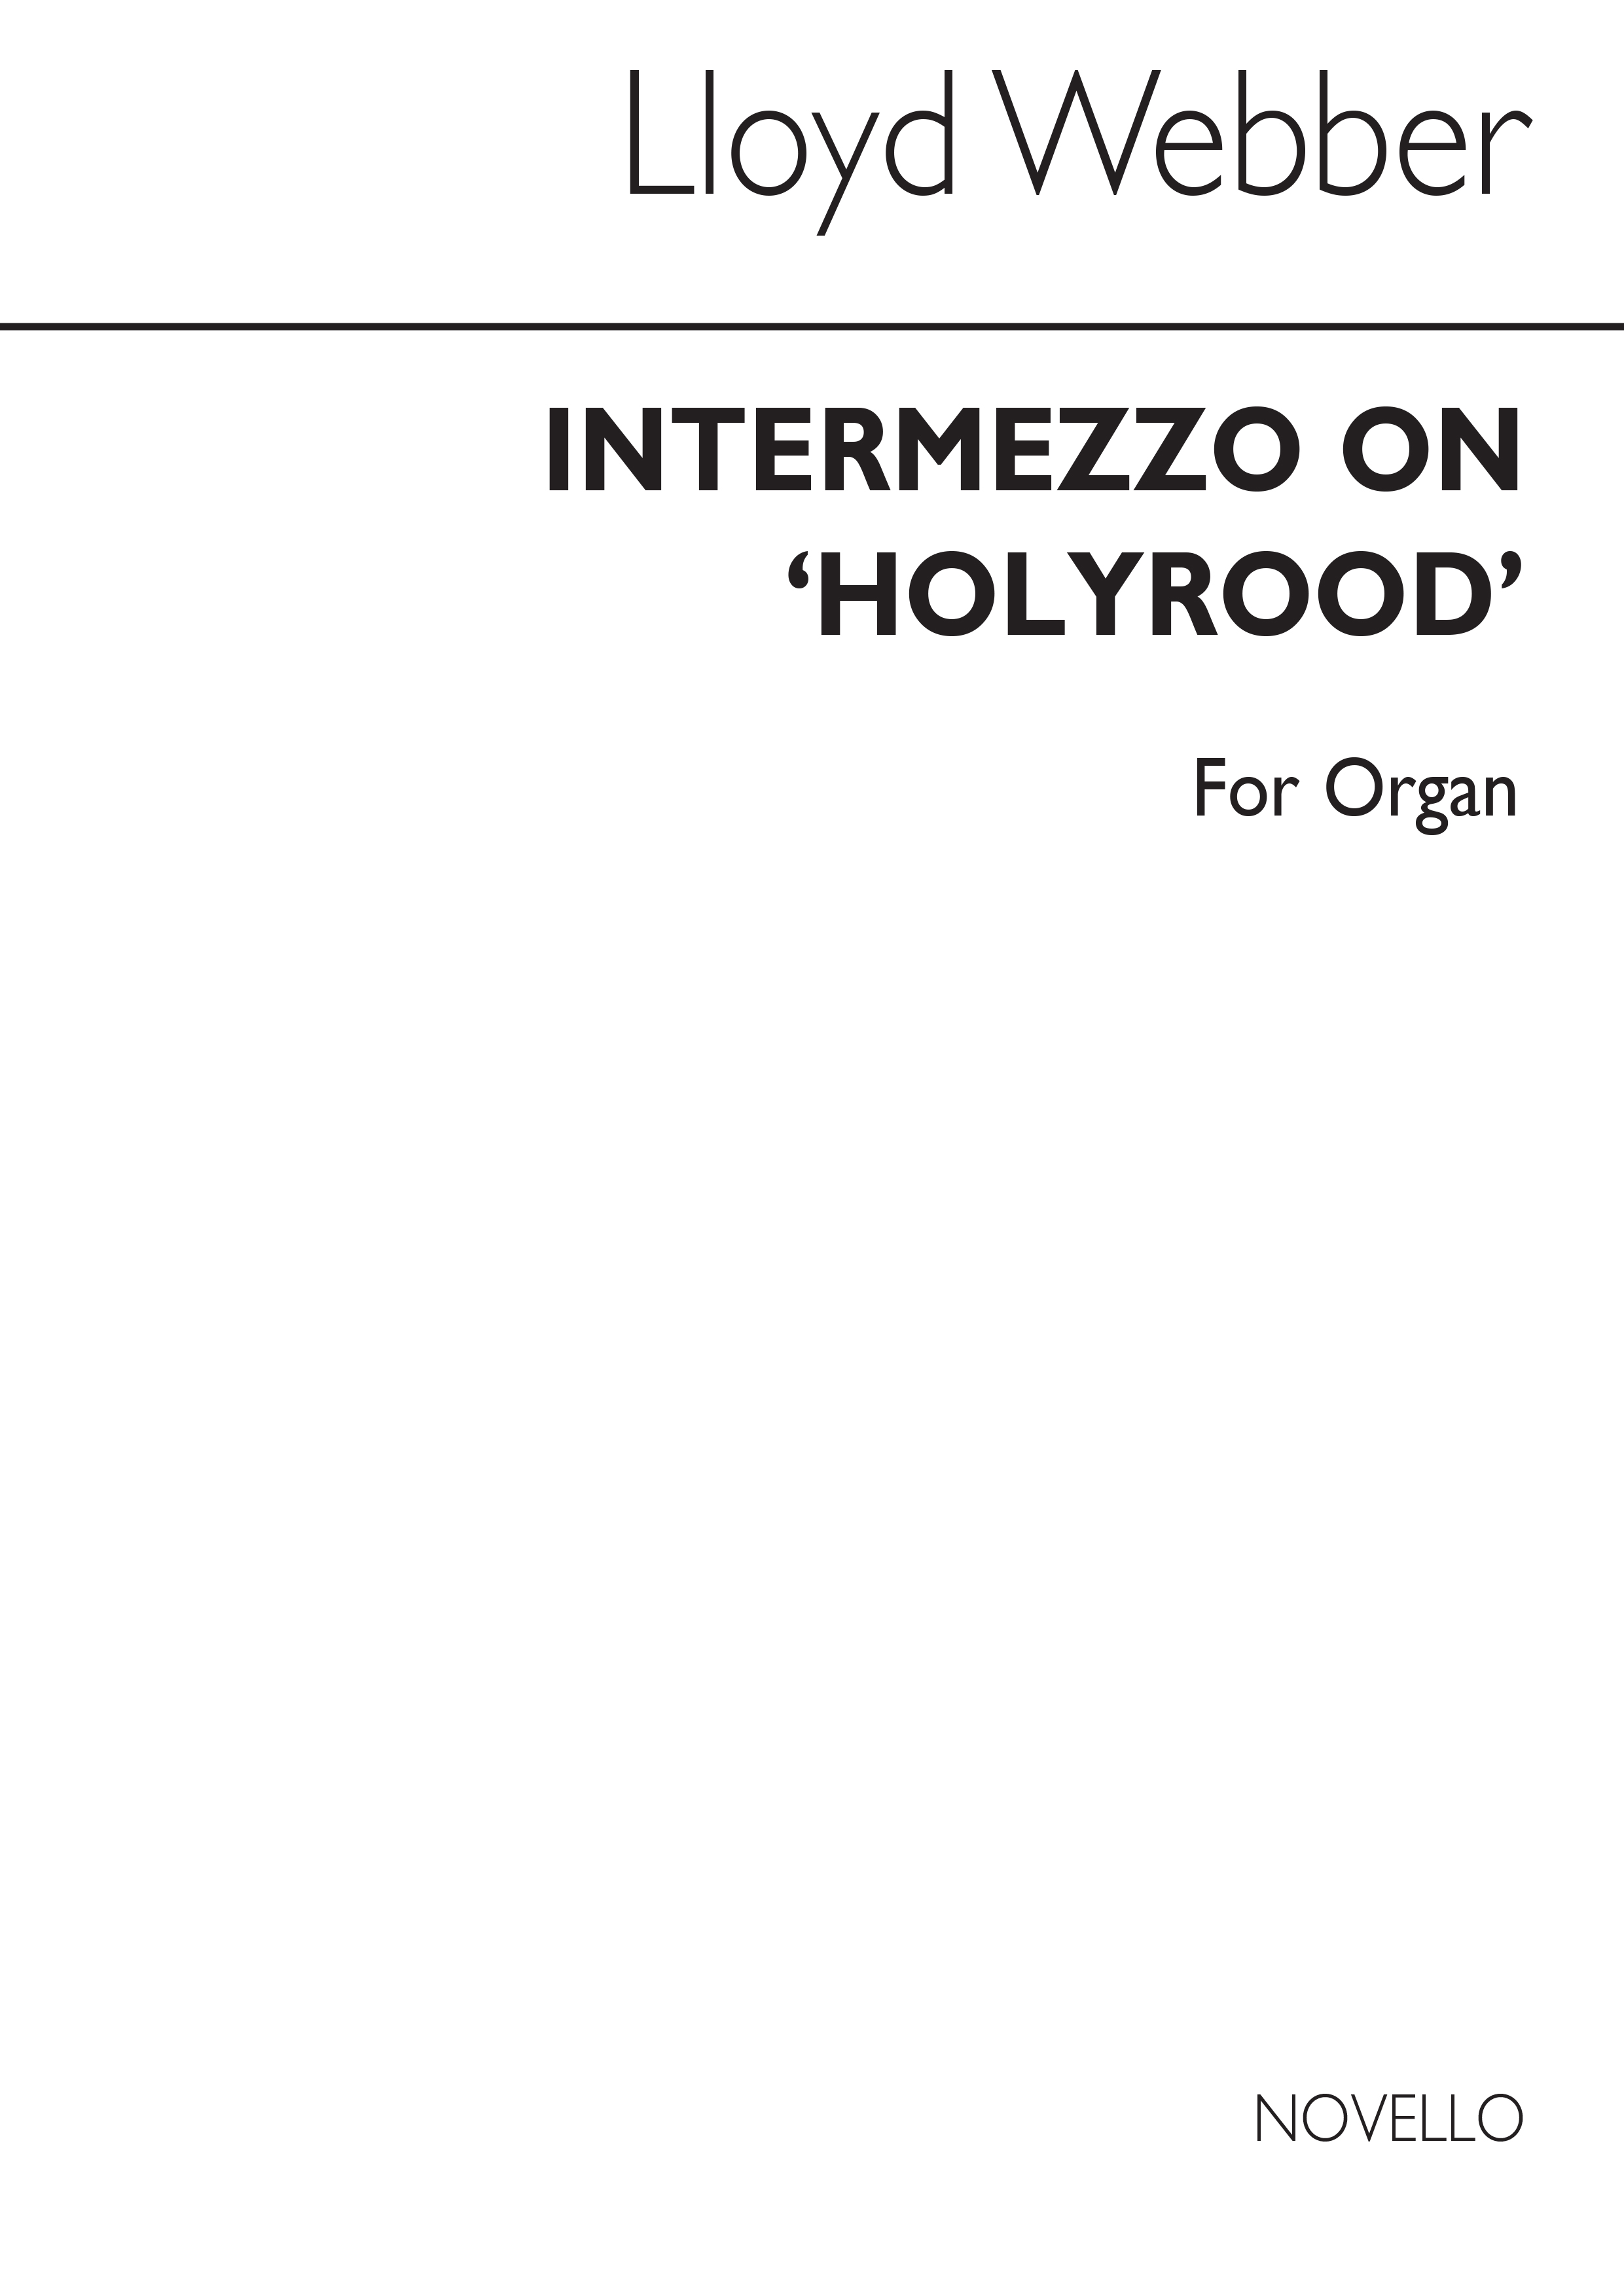 William Lloyd Webber: Intermezzo On 'Holyrood' Organ